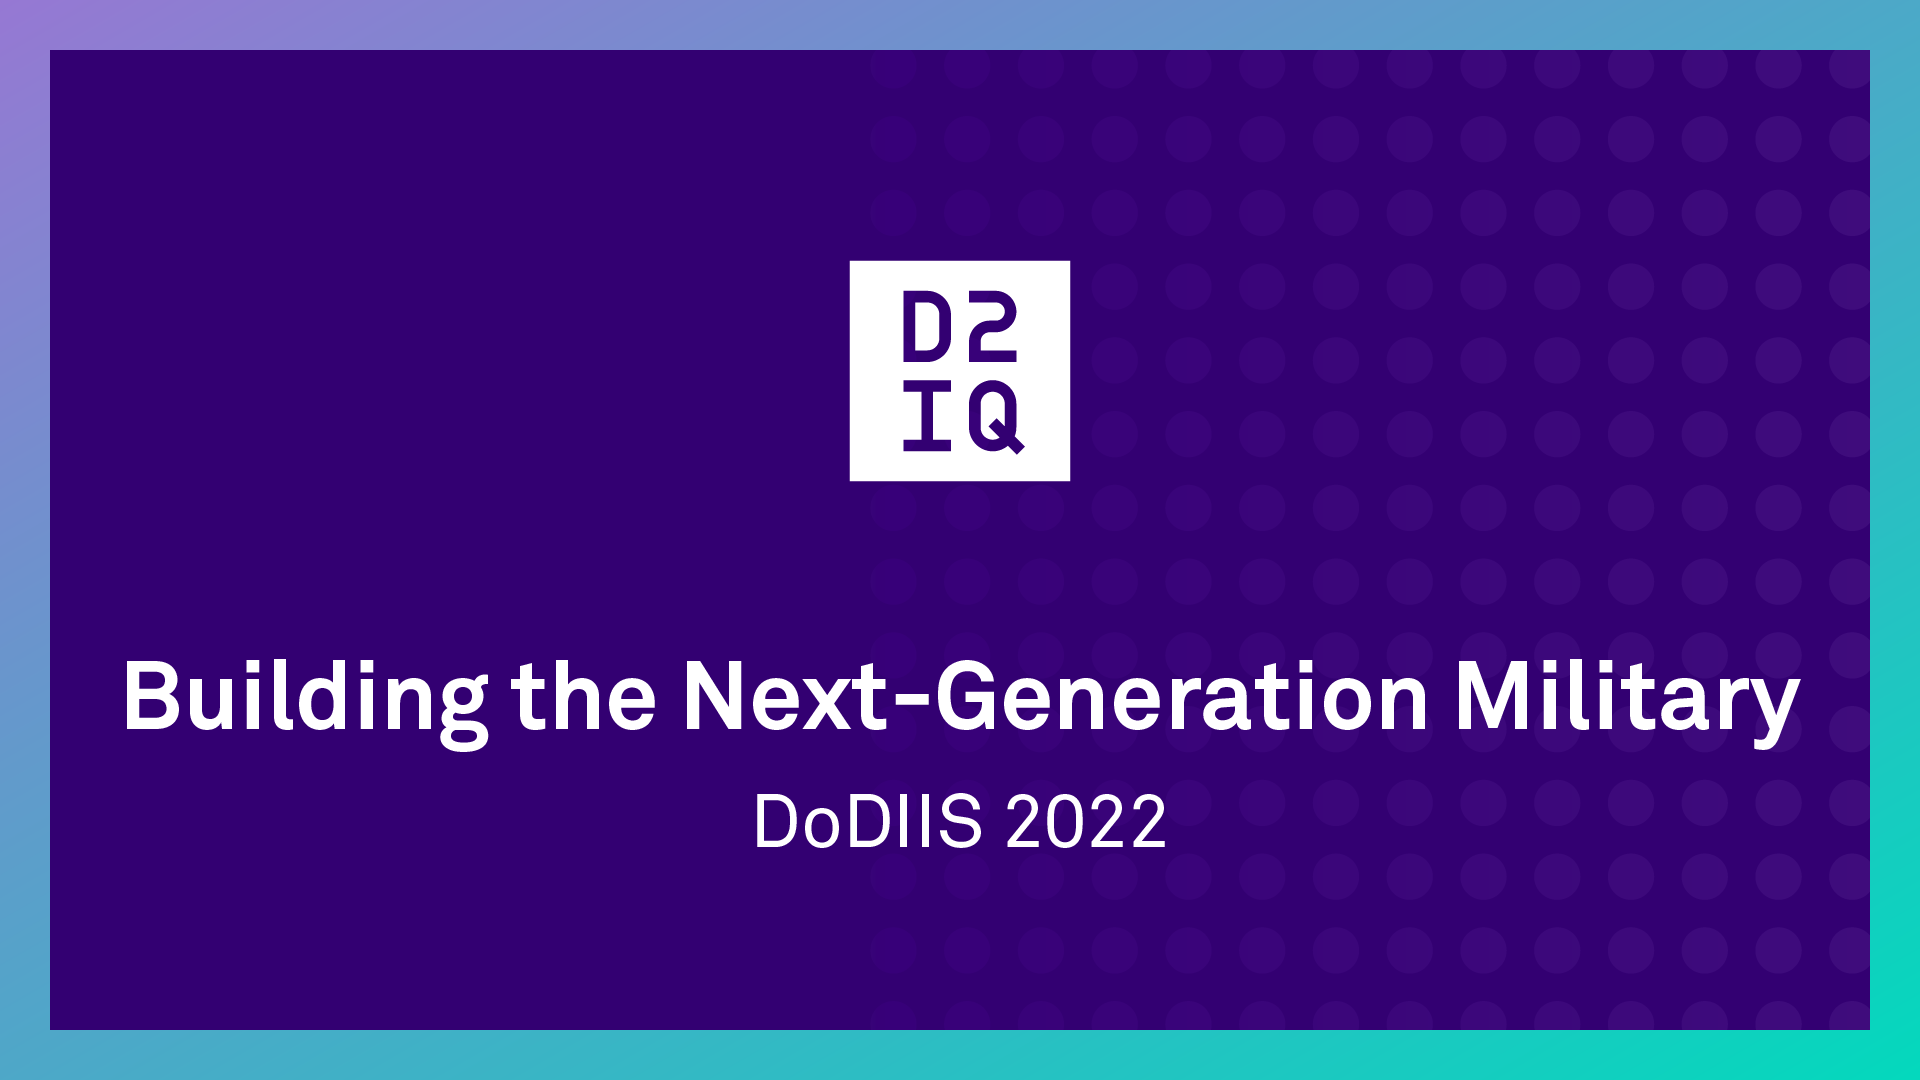 Building the Next-Generation Military: DoDIIS 2022